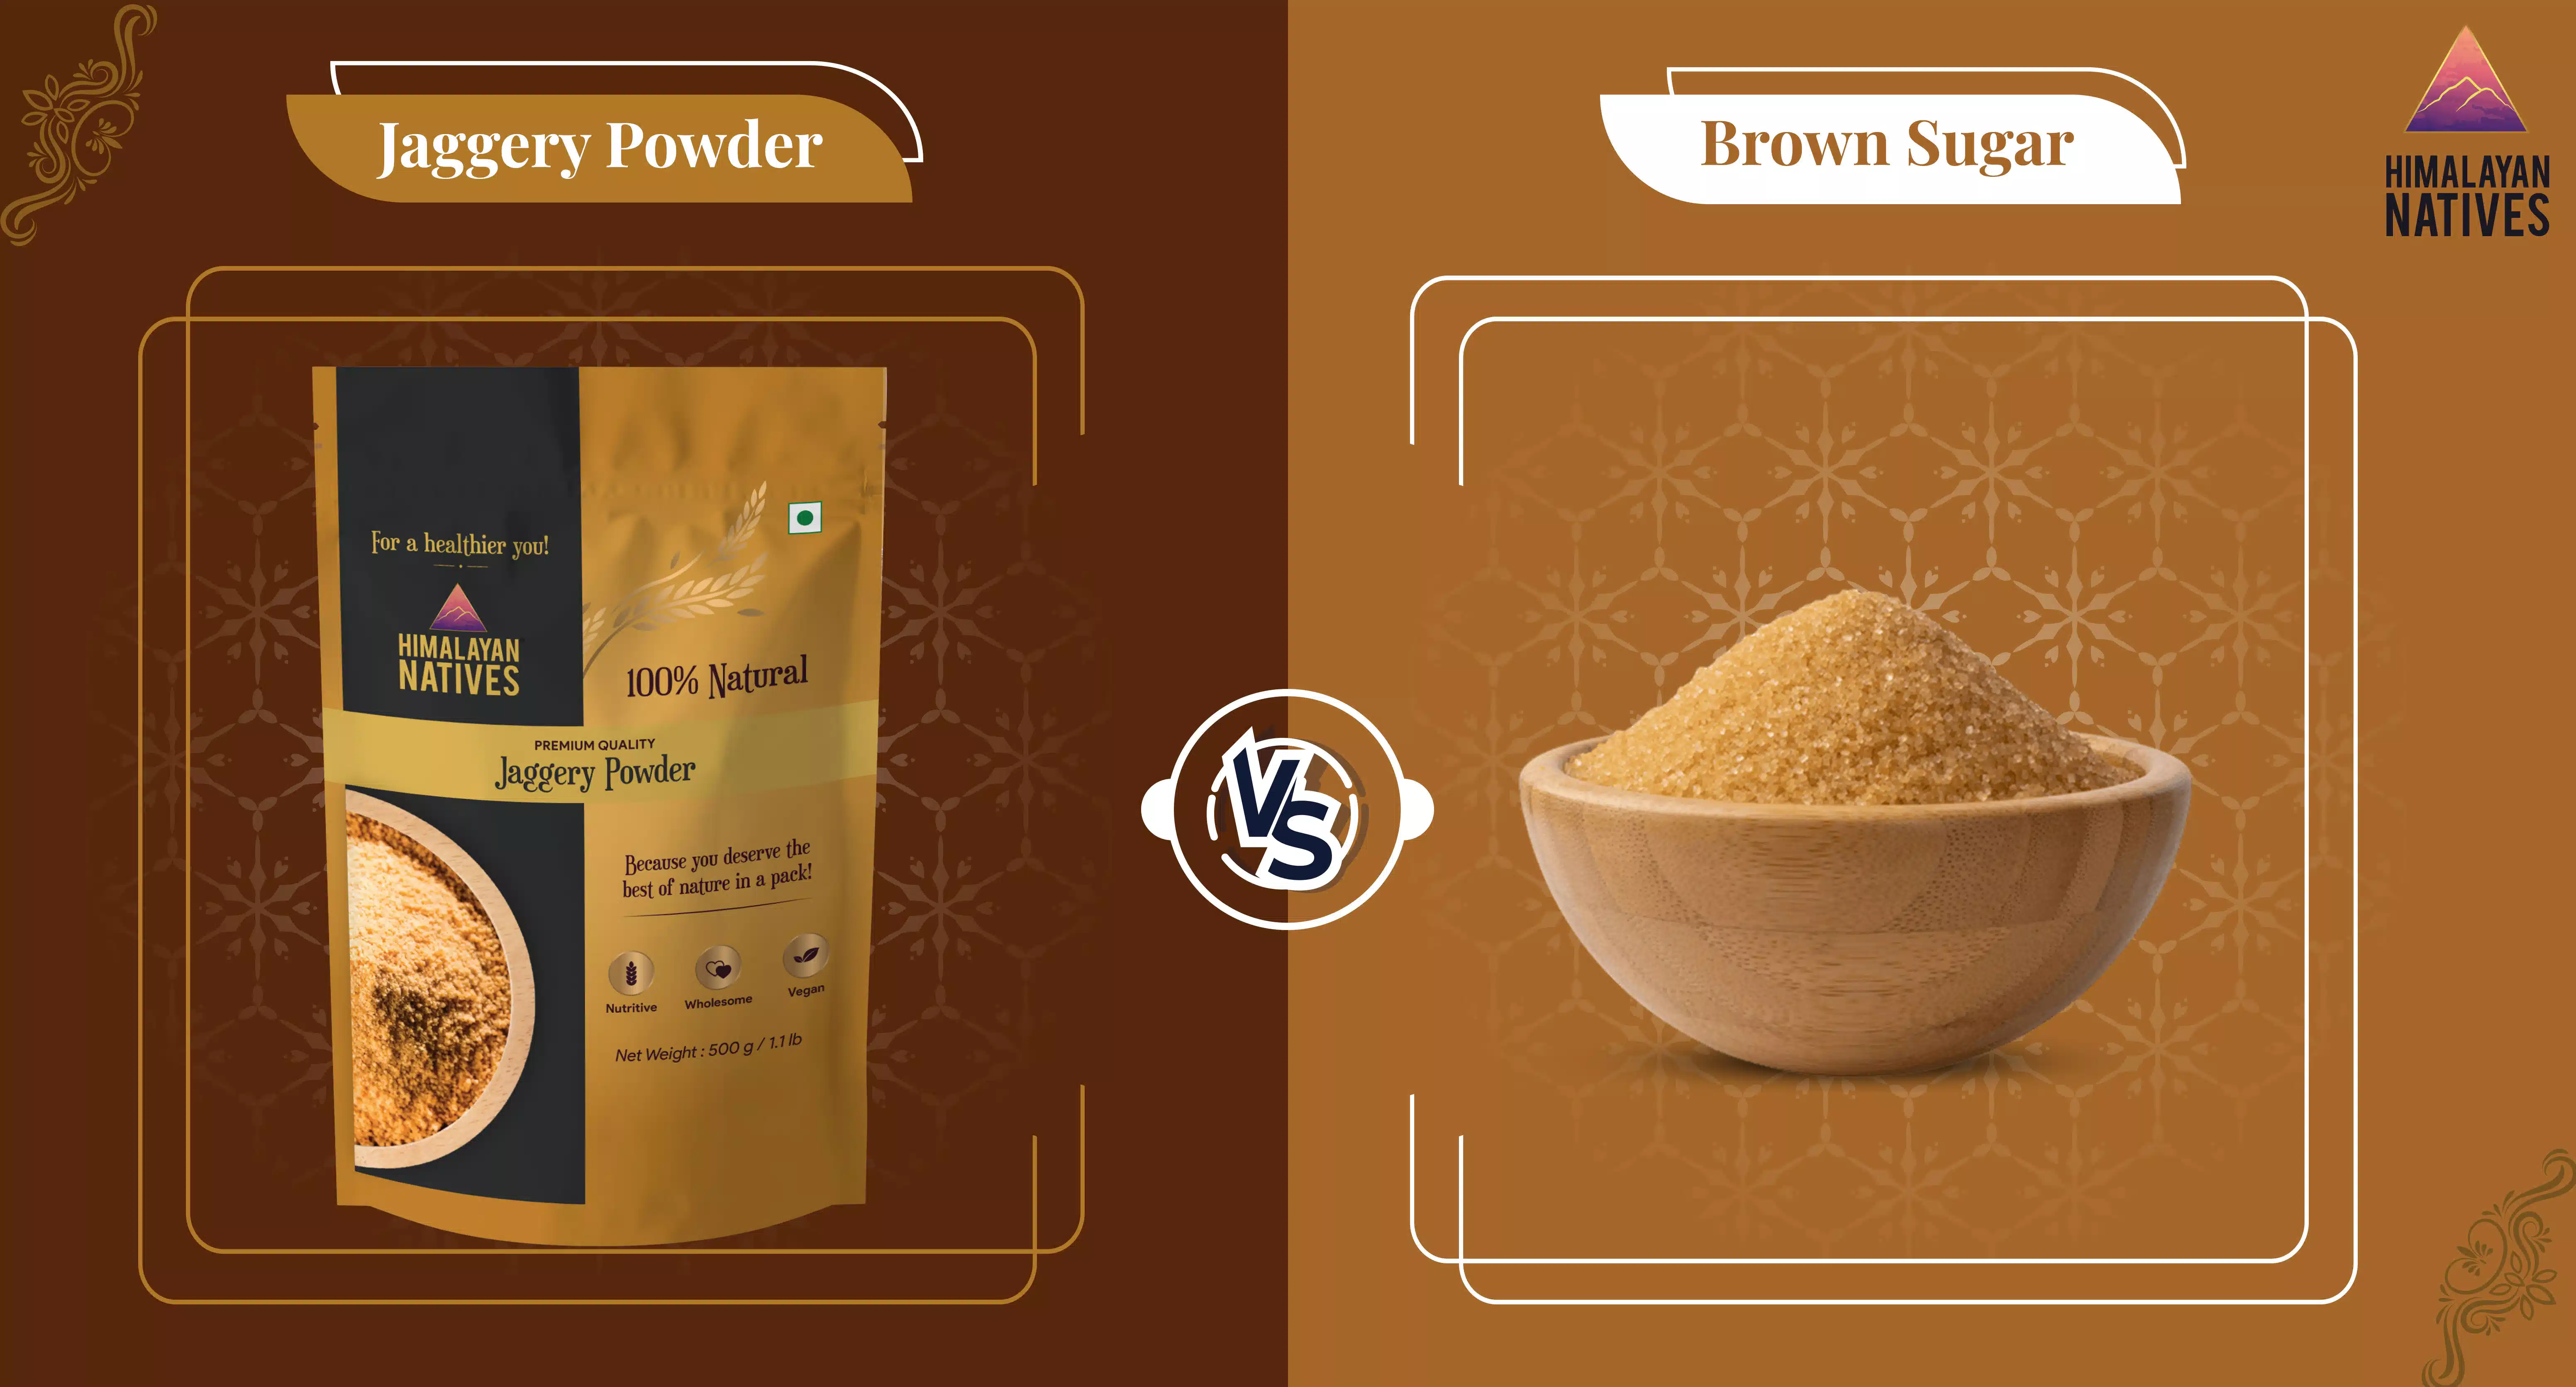 Brown Sugar vs Jaggery